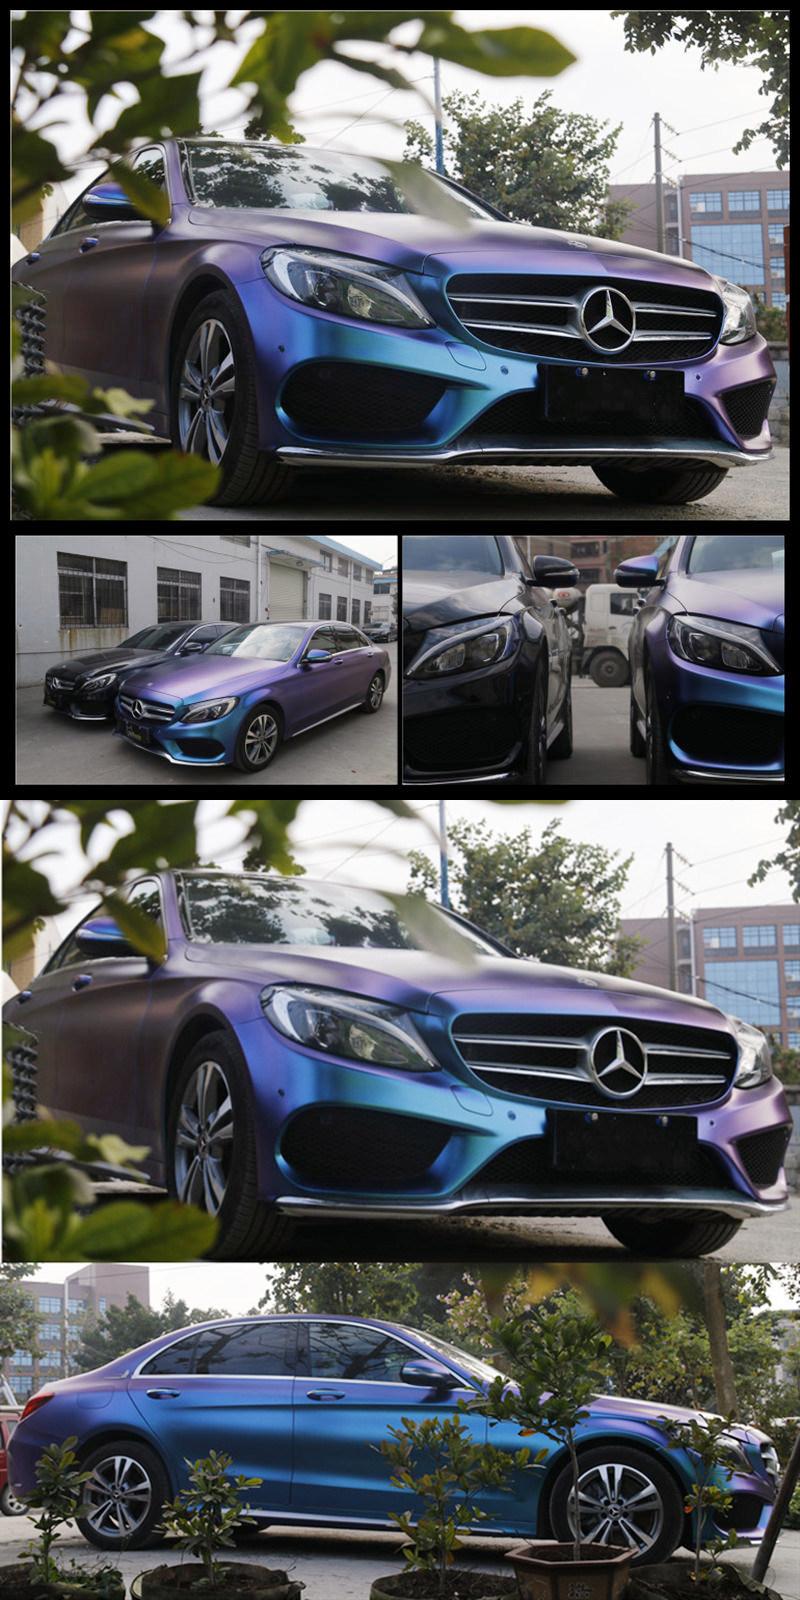 Onids 1.52*18m Car Wrap Air Release Magic Purple Blue Chameleon Lightning Film Vinyl Sticker